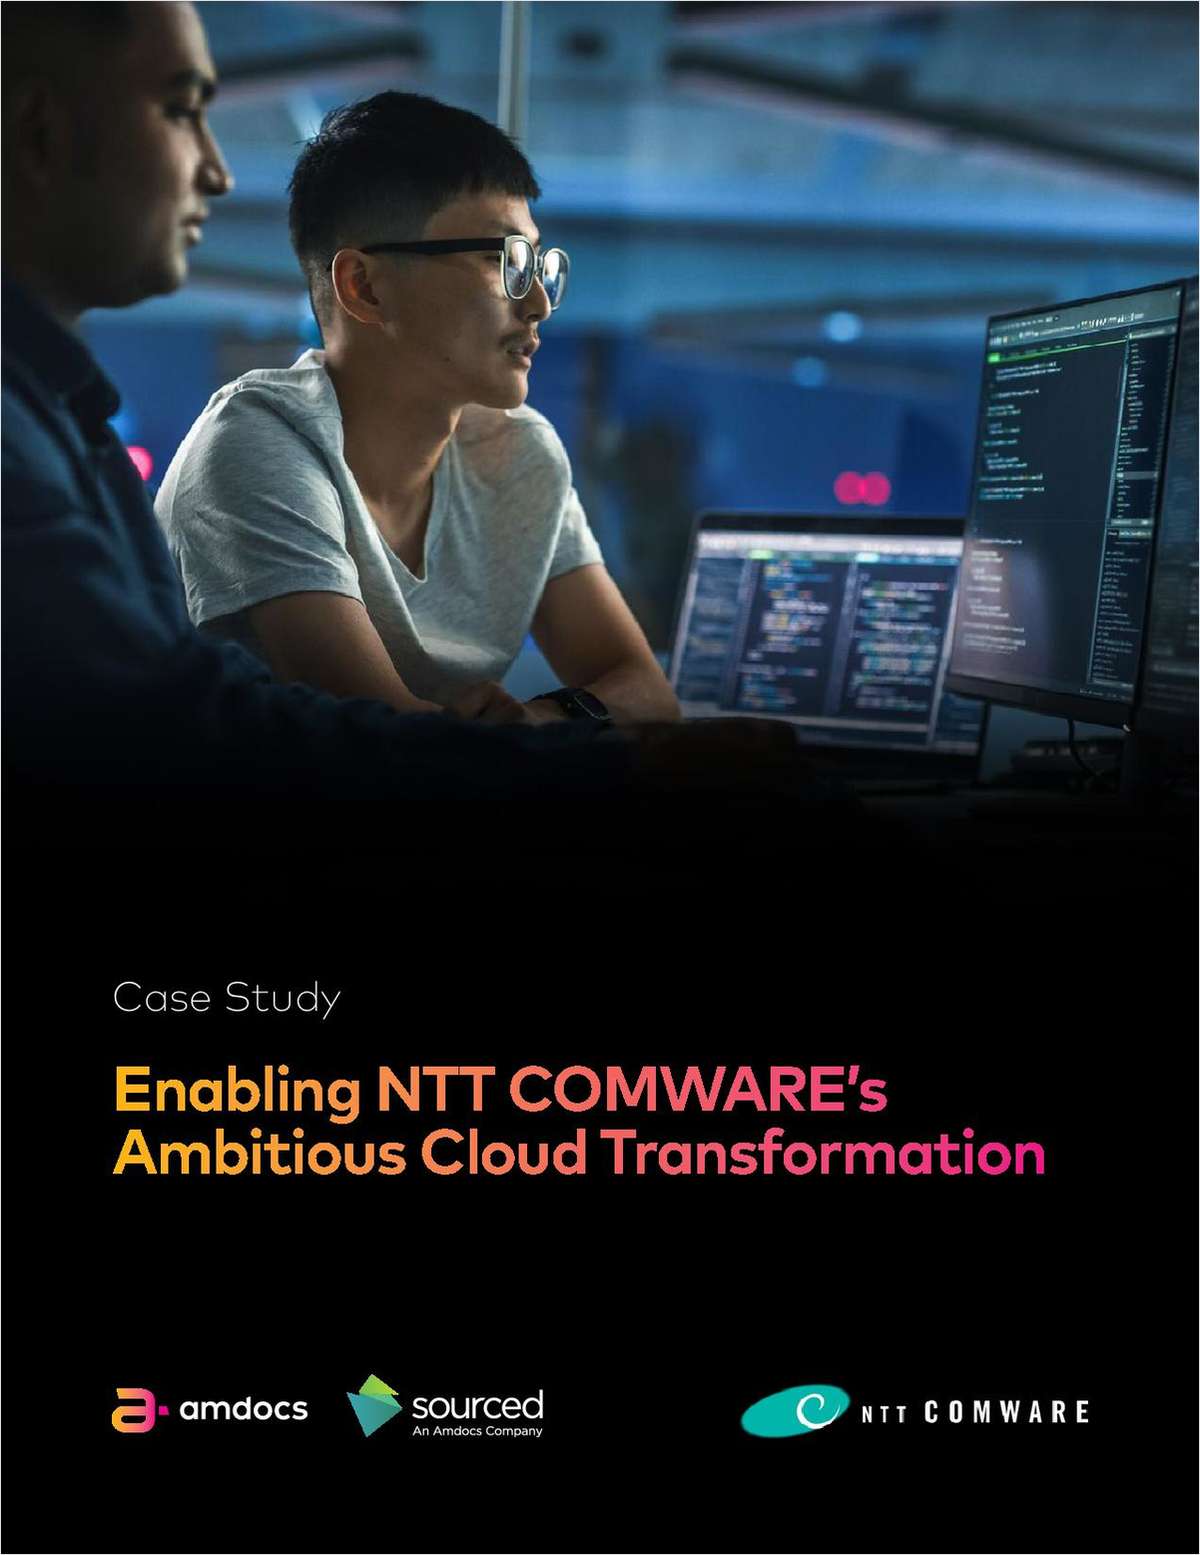 Enabling NTT COMWARE's ambitious cloud transformation